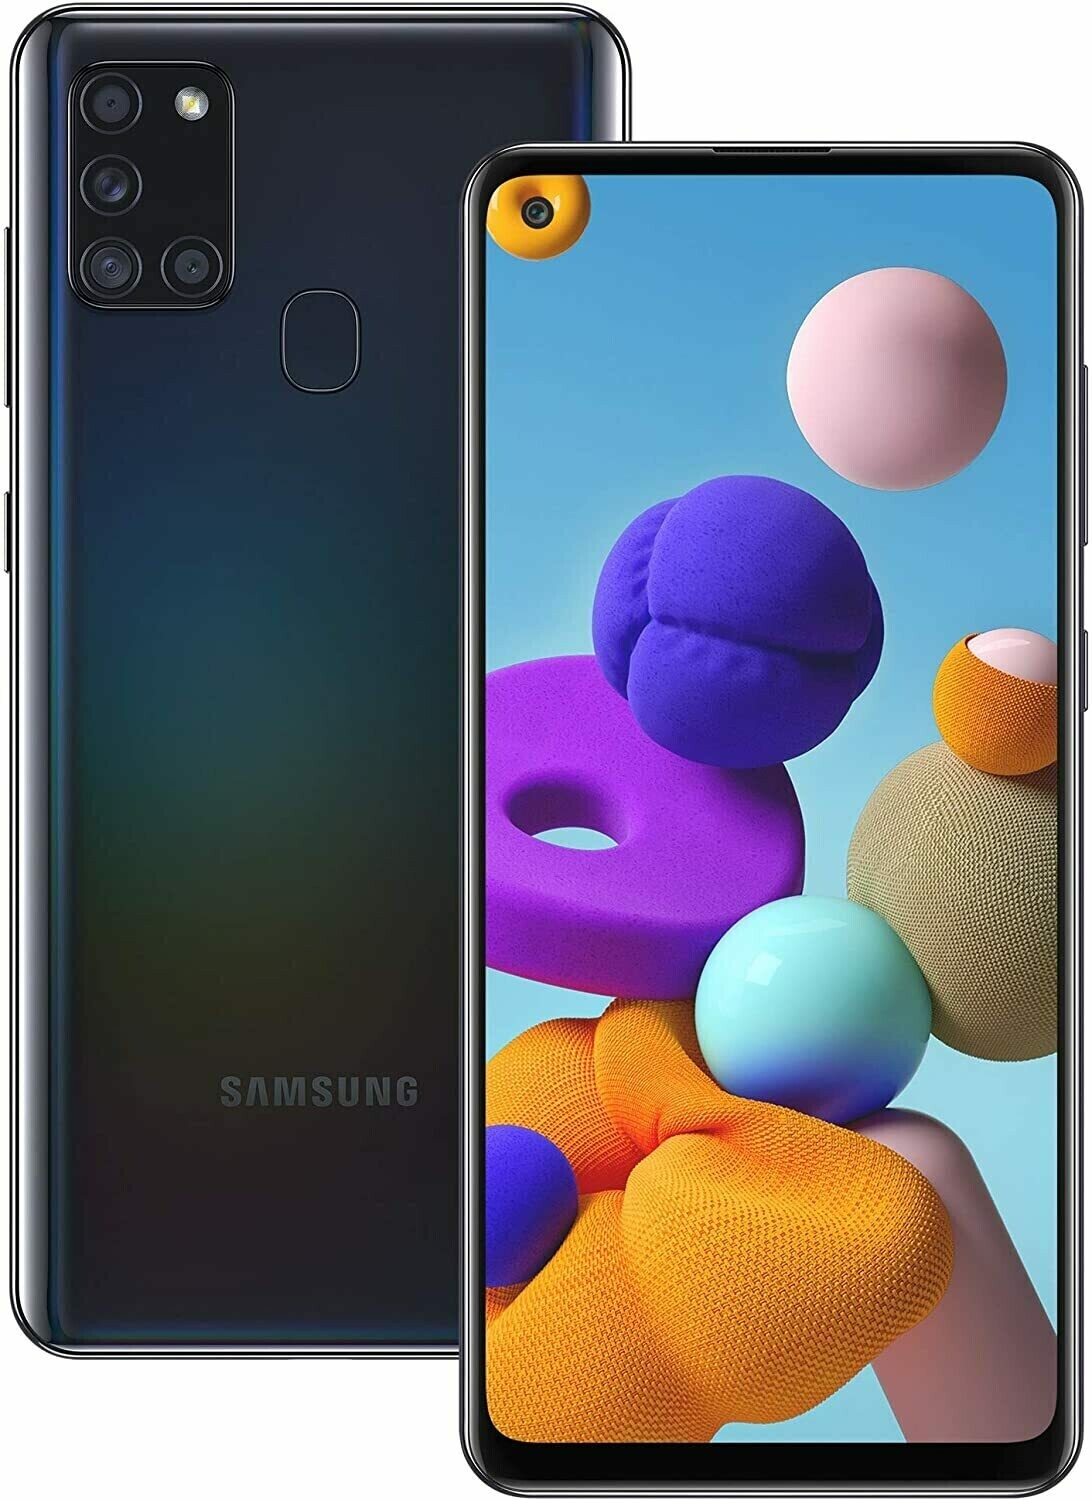 BOXED SEALED Samsung Galaxy A21s 32GB UNLOCKED